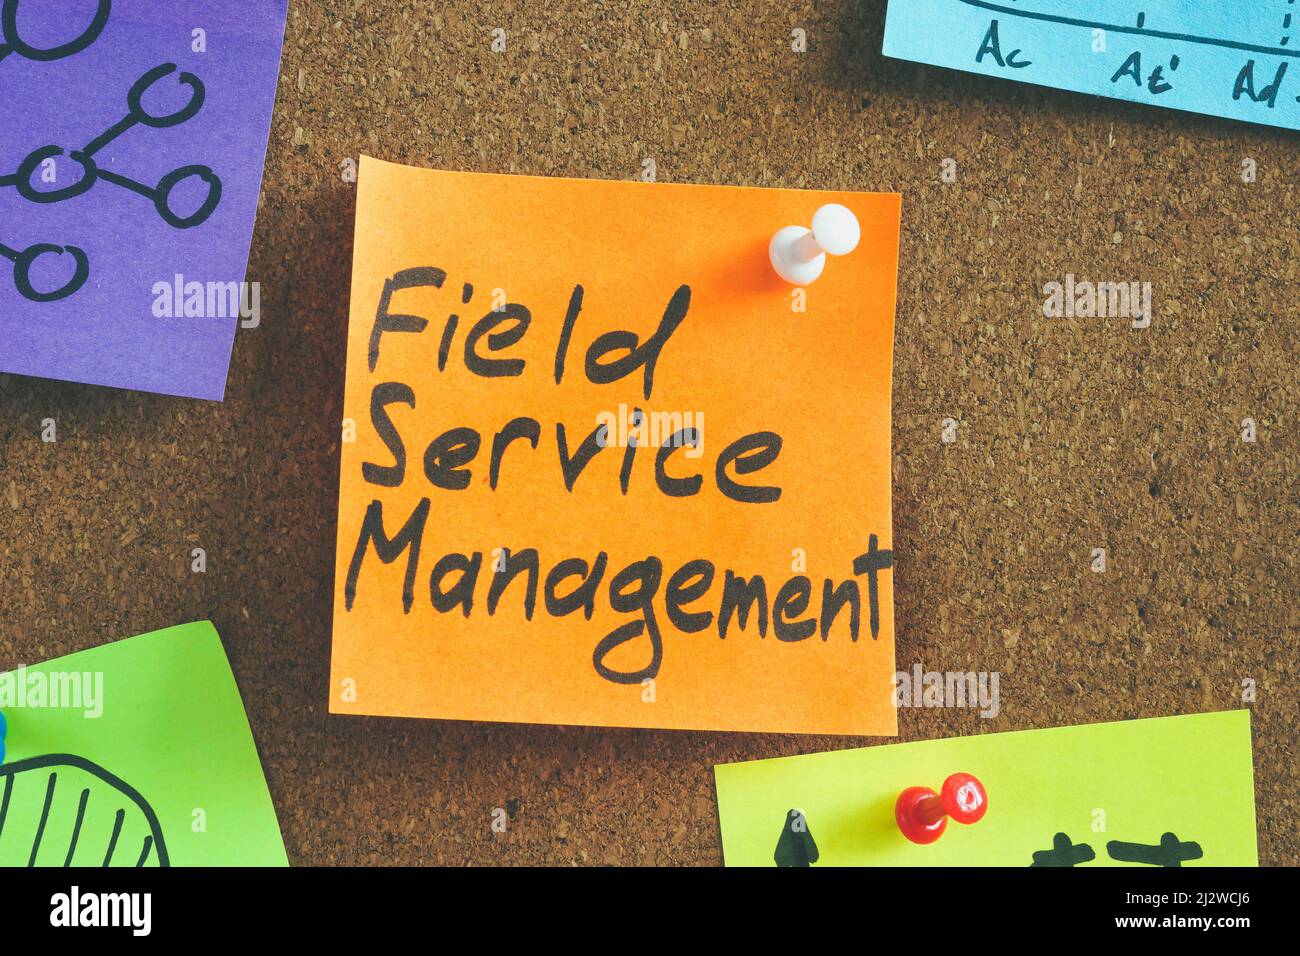 Field Service Management FSM on the memo sticker. Stock Photo